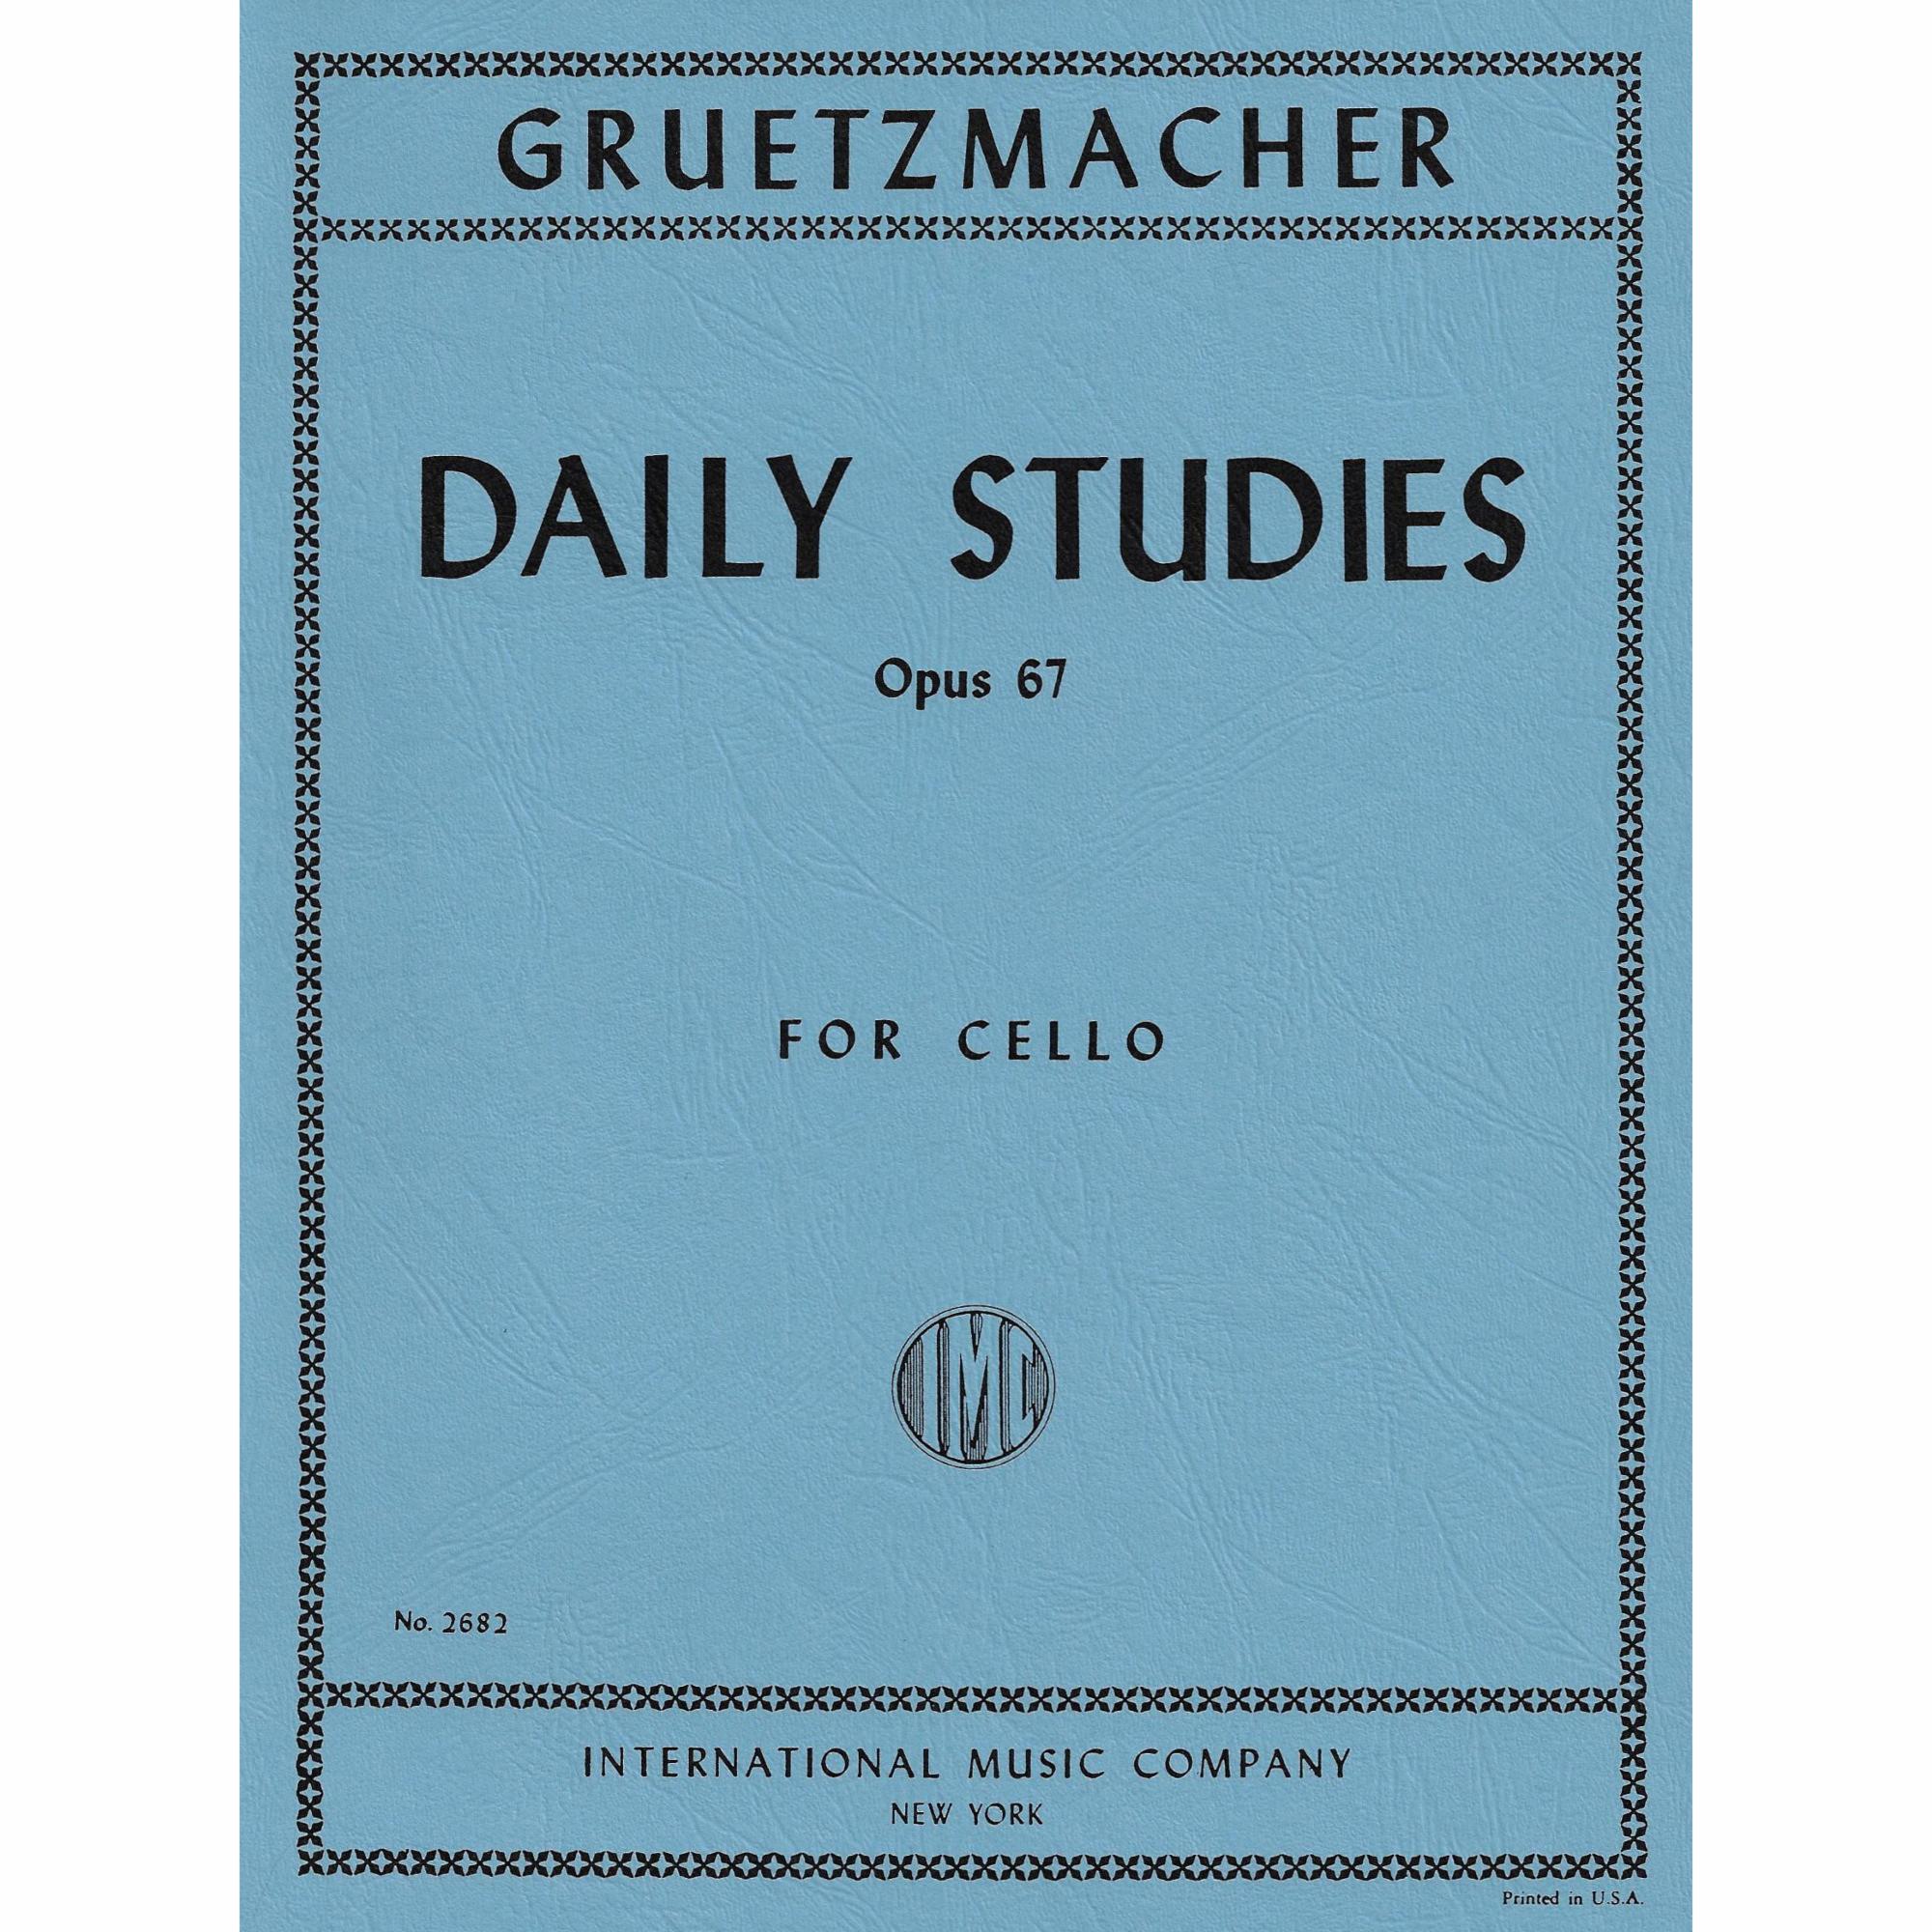 Gruetzmacher -- Daily Studies, Op. 67 for Cello